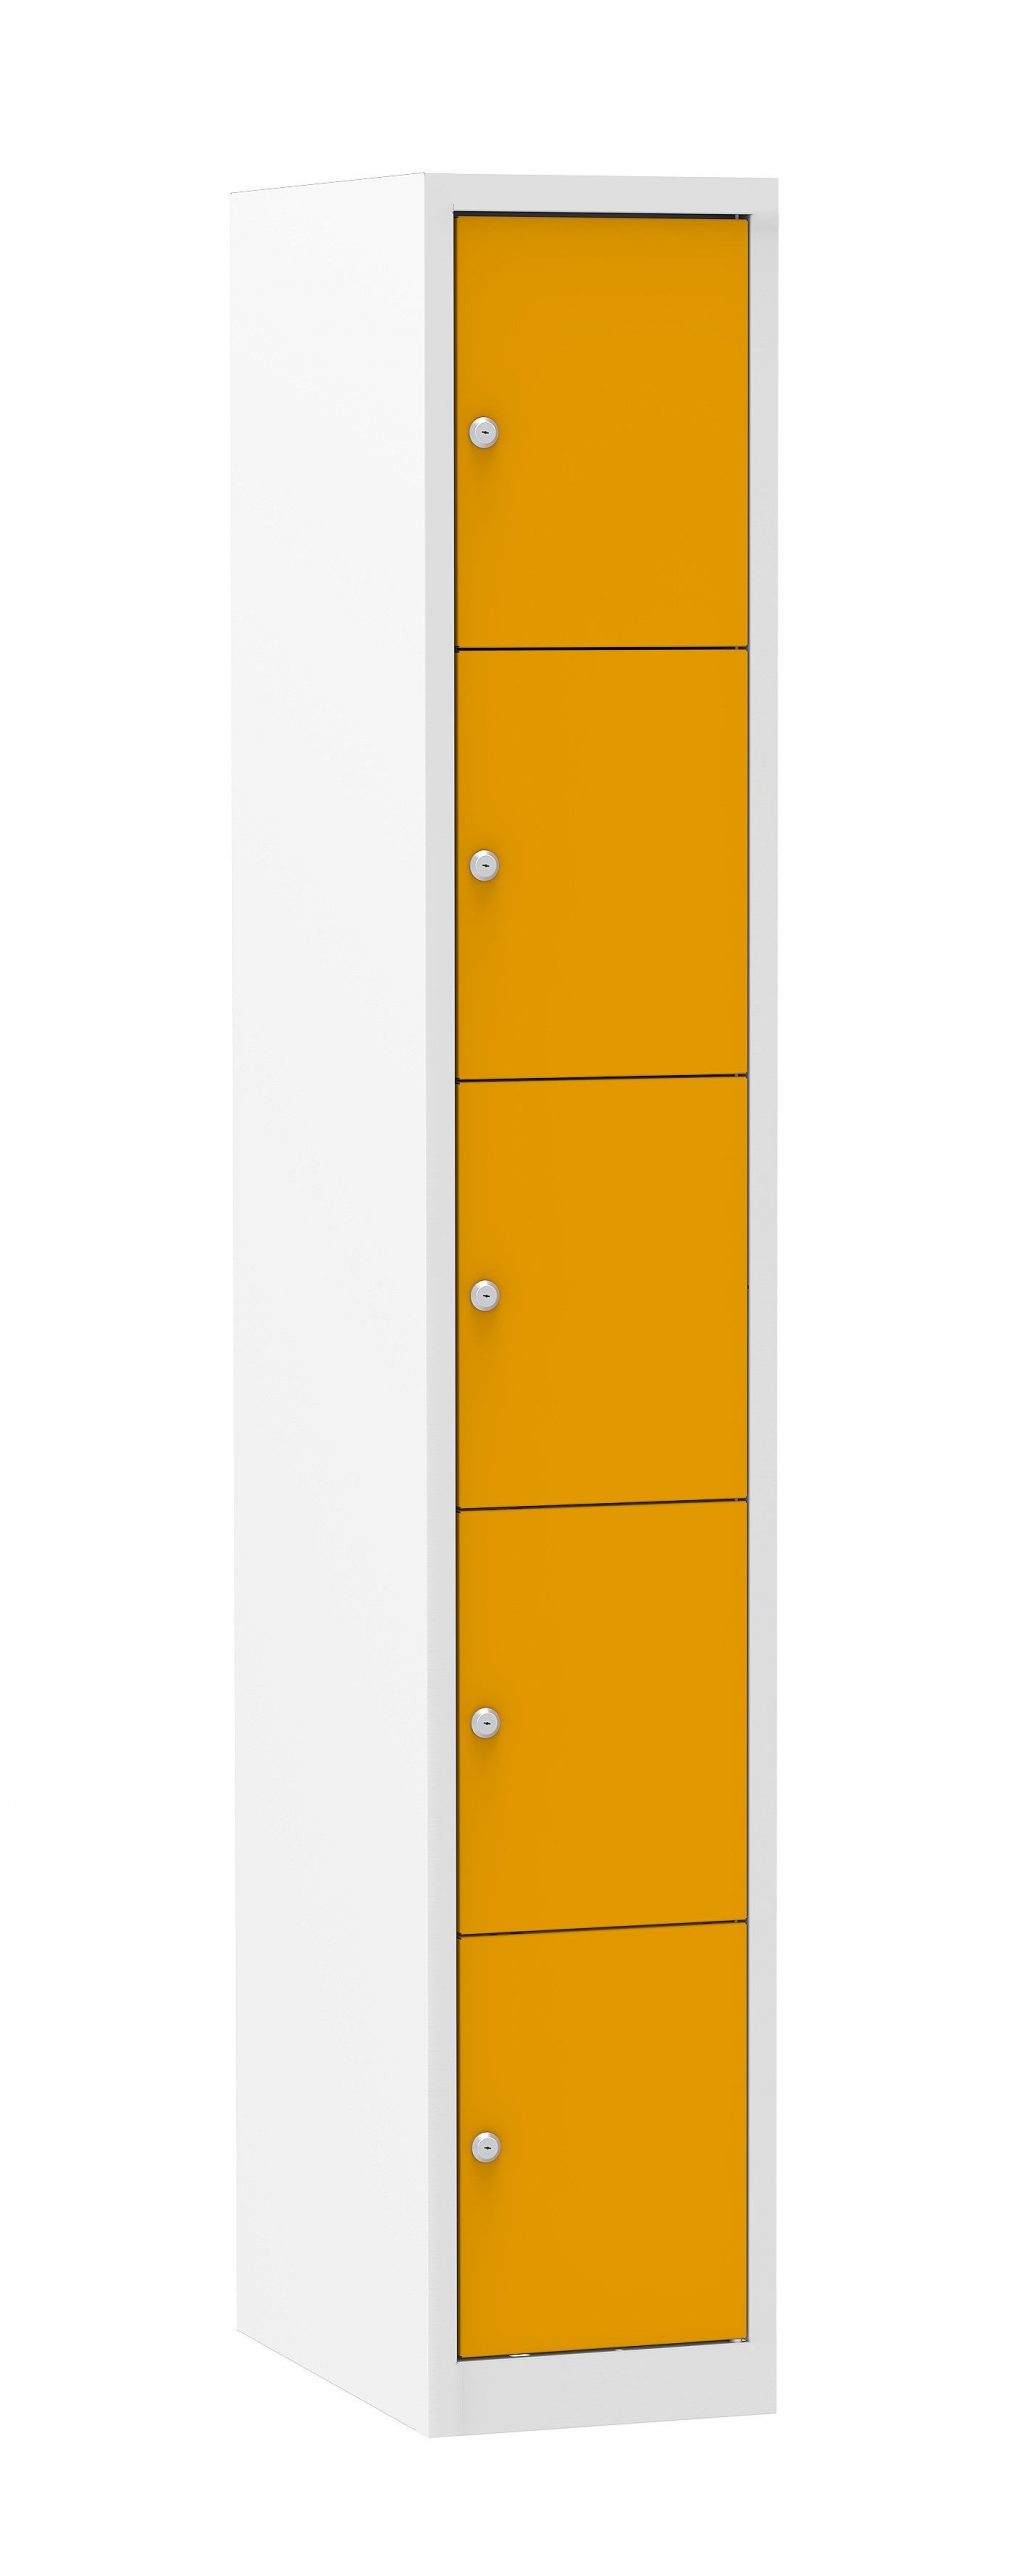 Antecedent gas Laboratorium Multicolor locker 30cm breed, 1-koloms, 5-deurs | Kantoormeubel4sale